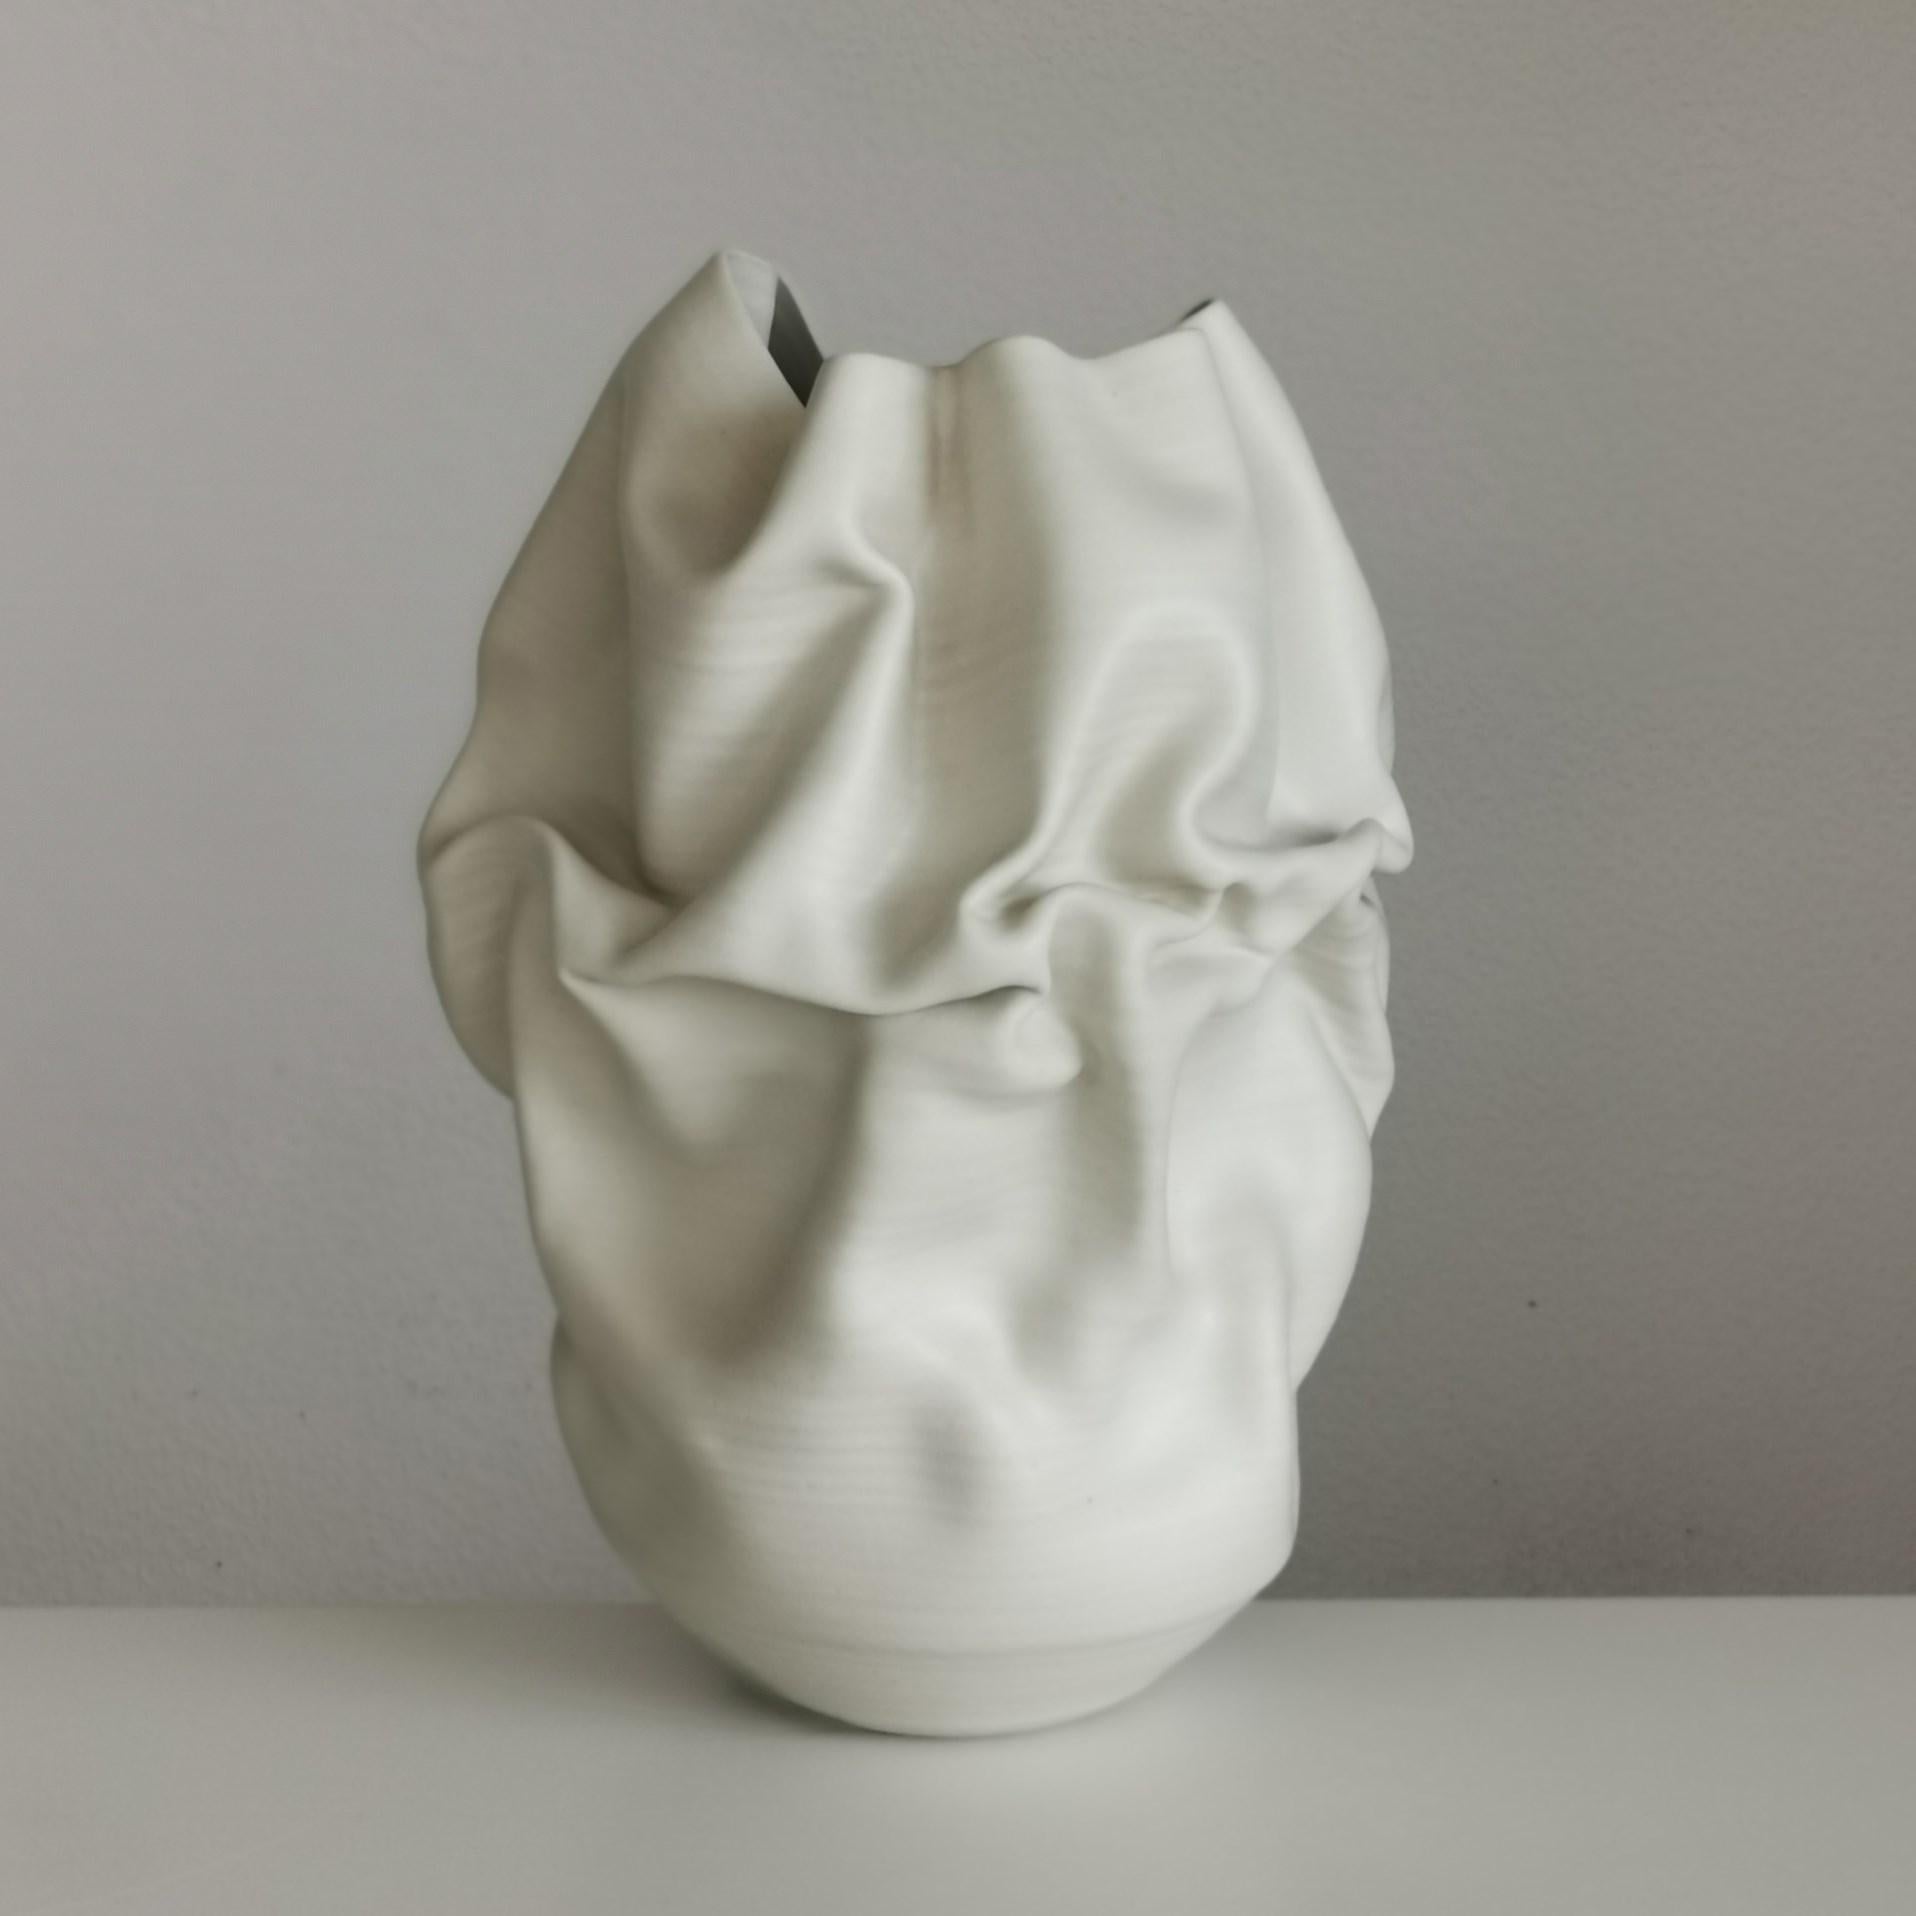 Undulating Crumpled Form No 51, a Ceramic Vessel by Nicholas Arroyave-Portela 1